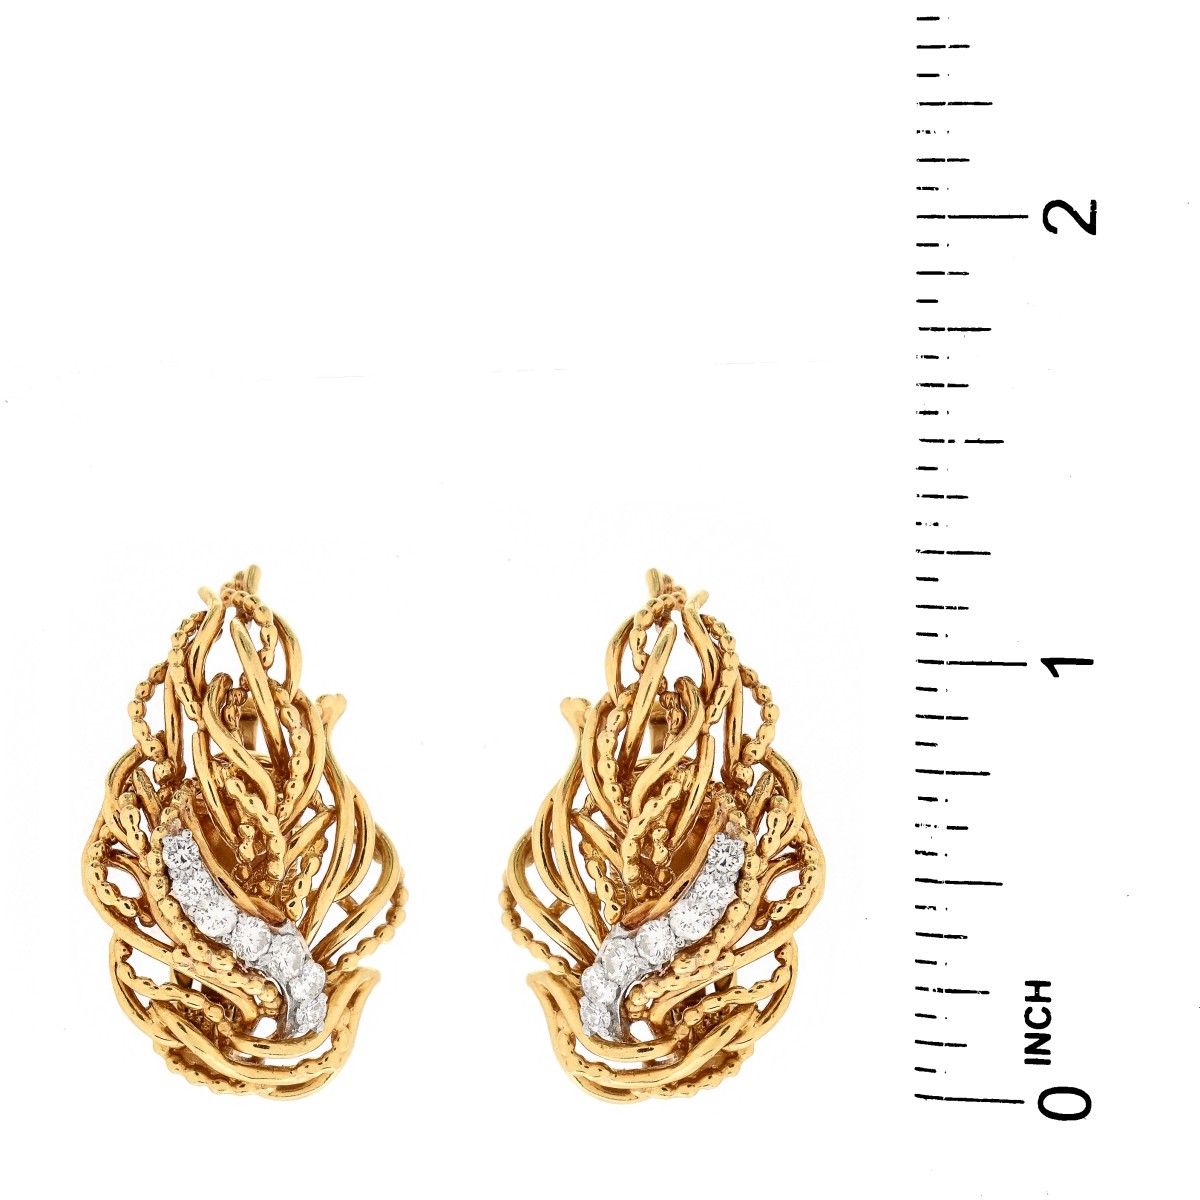 Vintage Tiffany & Co Diamond and 18K Earrings